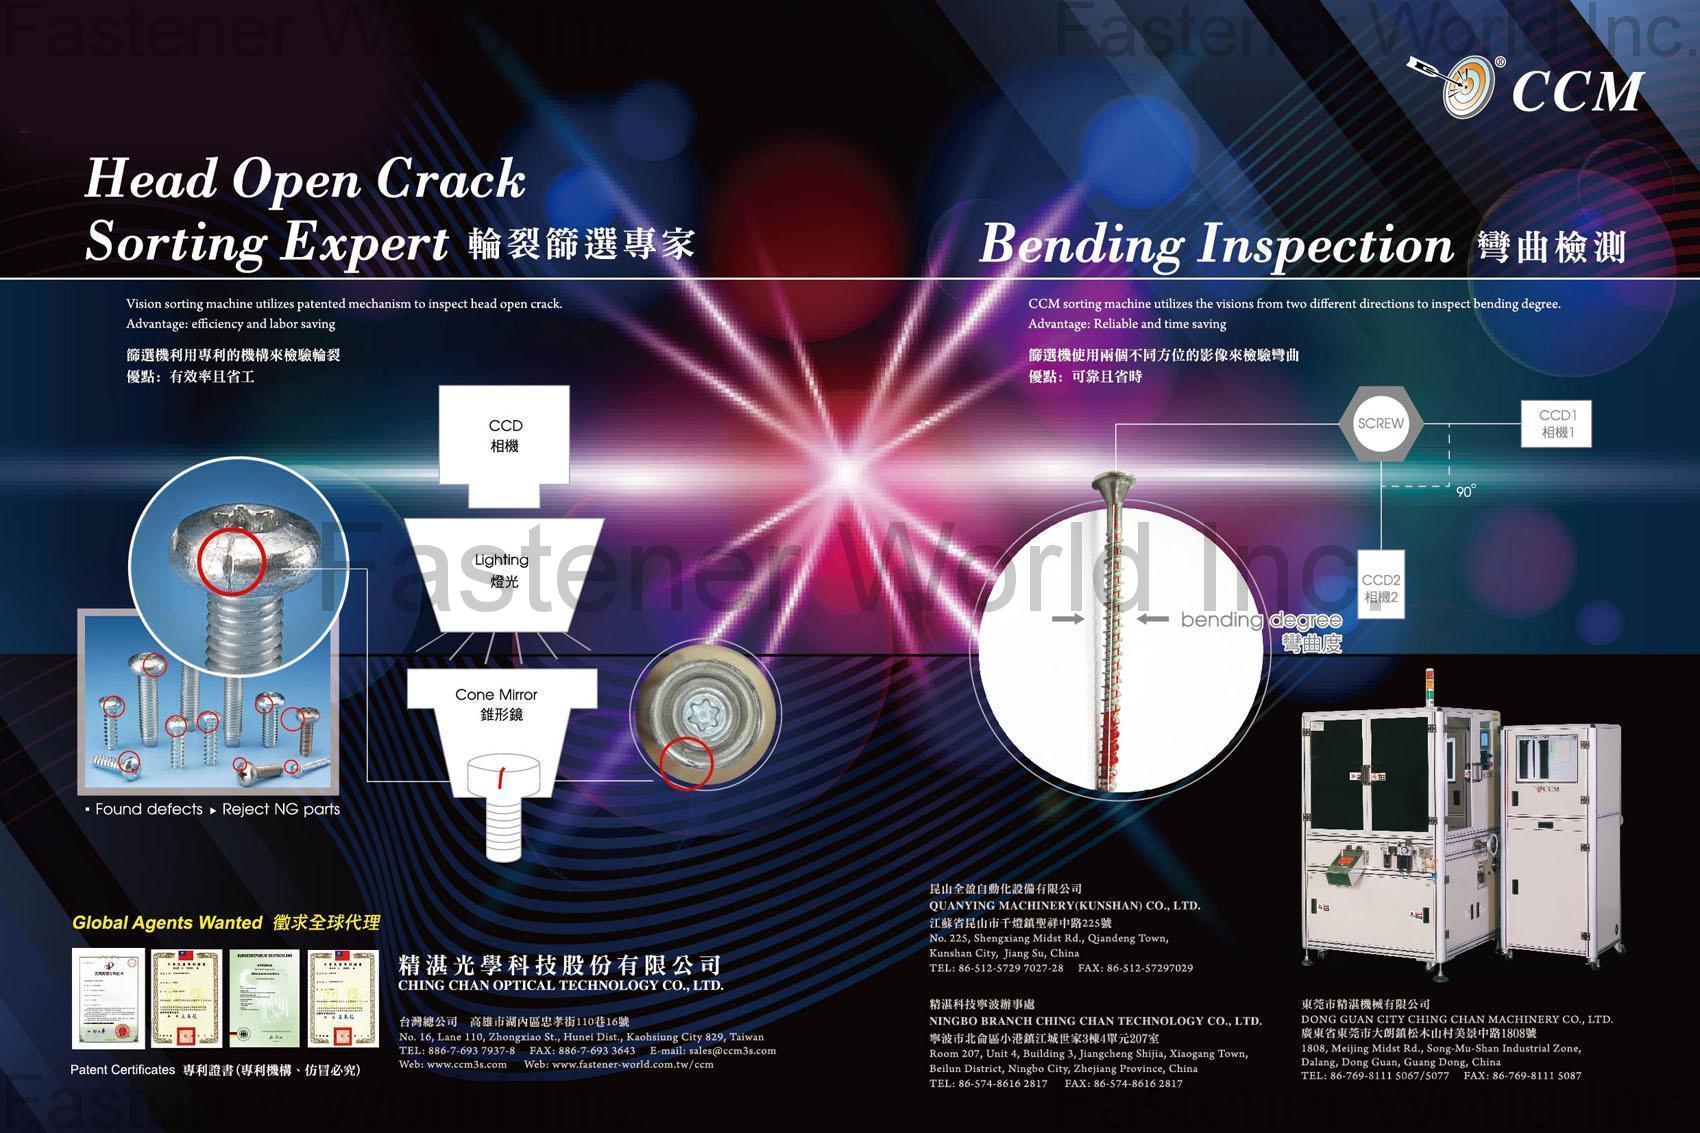 CHING CHAN OPTICAL TECHNOLOGY CO., LTD. (CCM) , Head Open Crack Sorting Expert, Conveyor Sorting Machine, Bending Inspection , Optical Sorting Machine